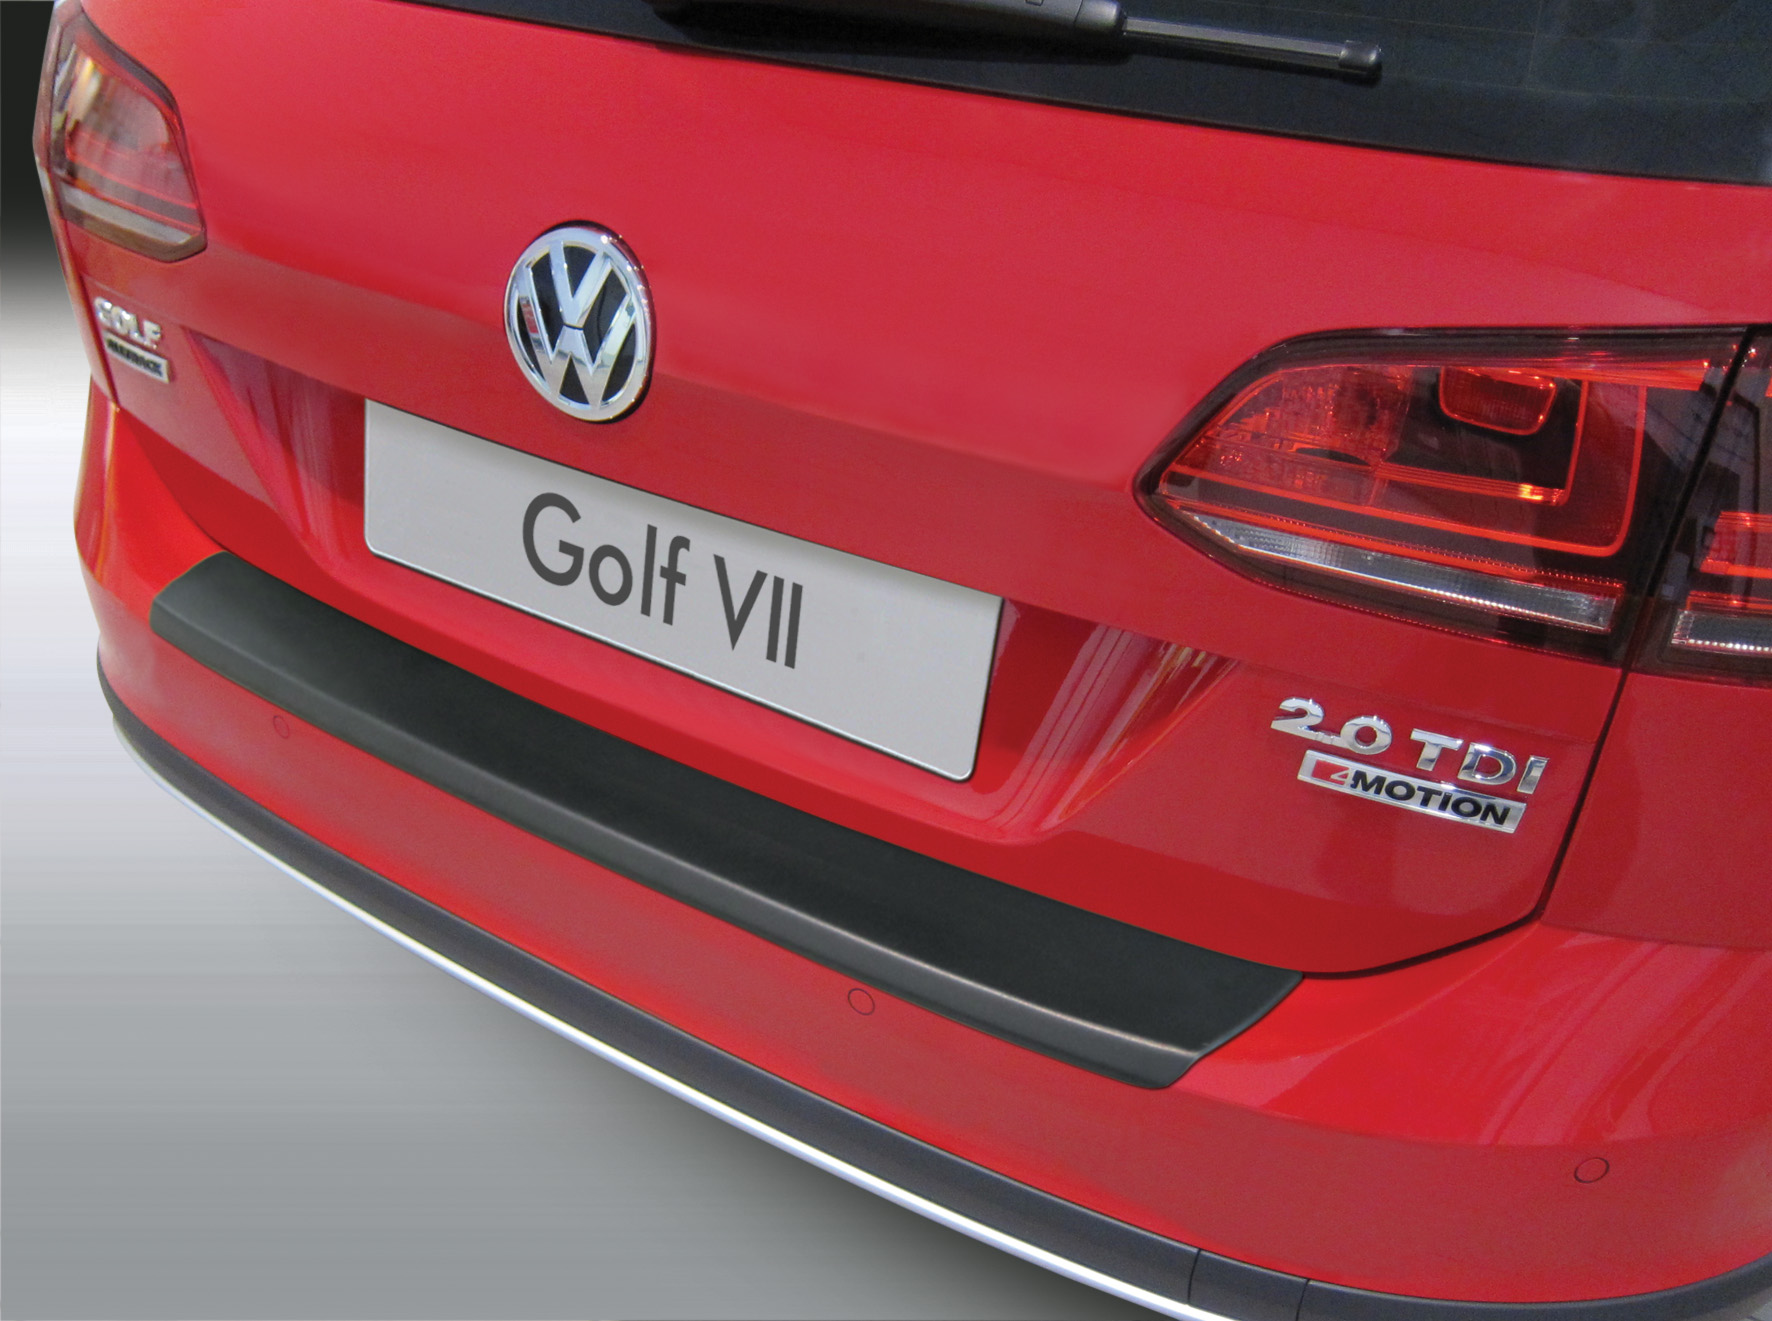 VW Golf 7 Ladekantenschutz Abkantung Stoßstange Schutz Aufkleber Etikett